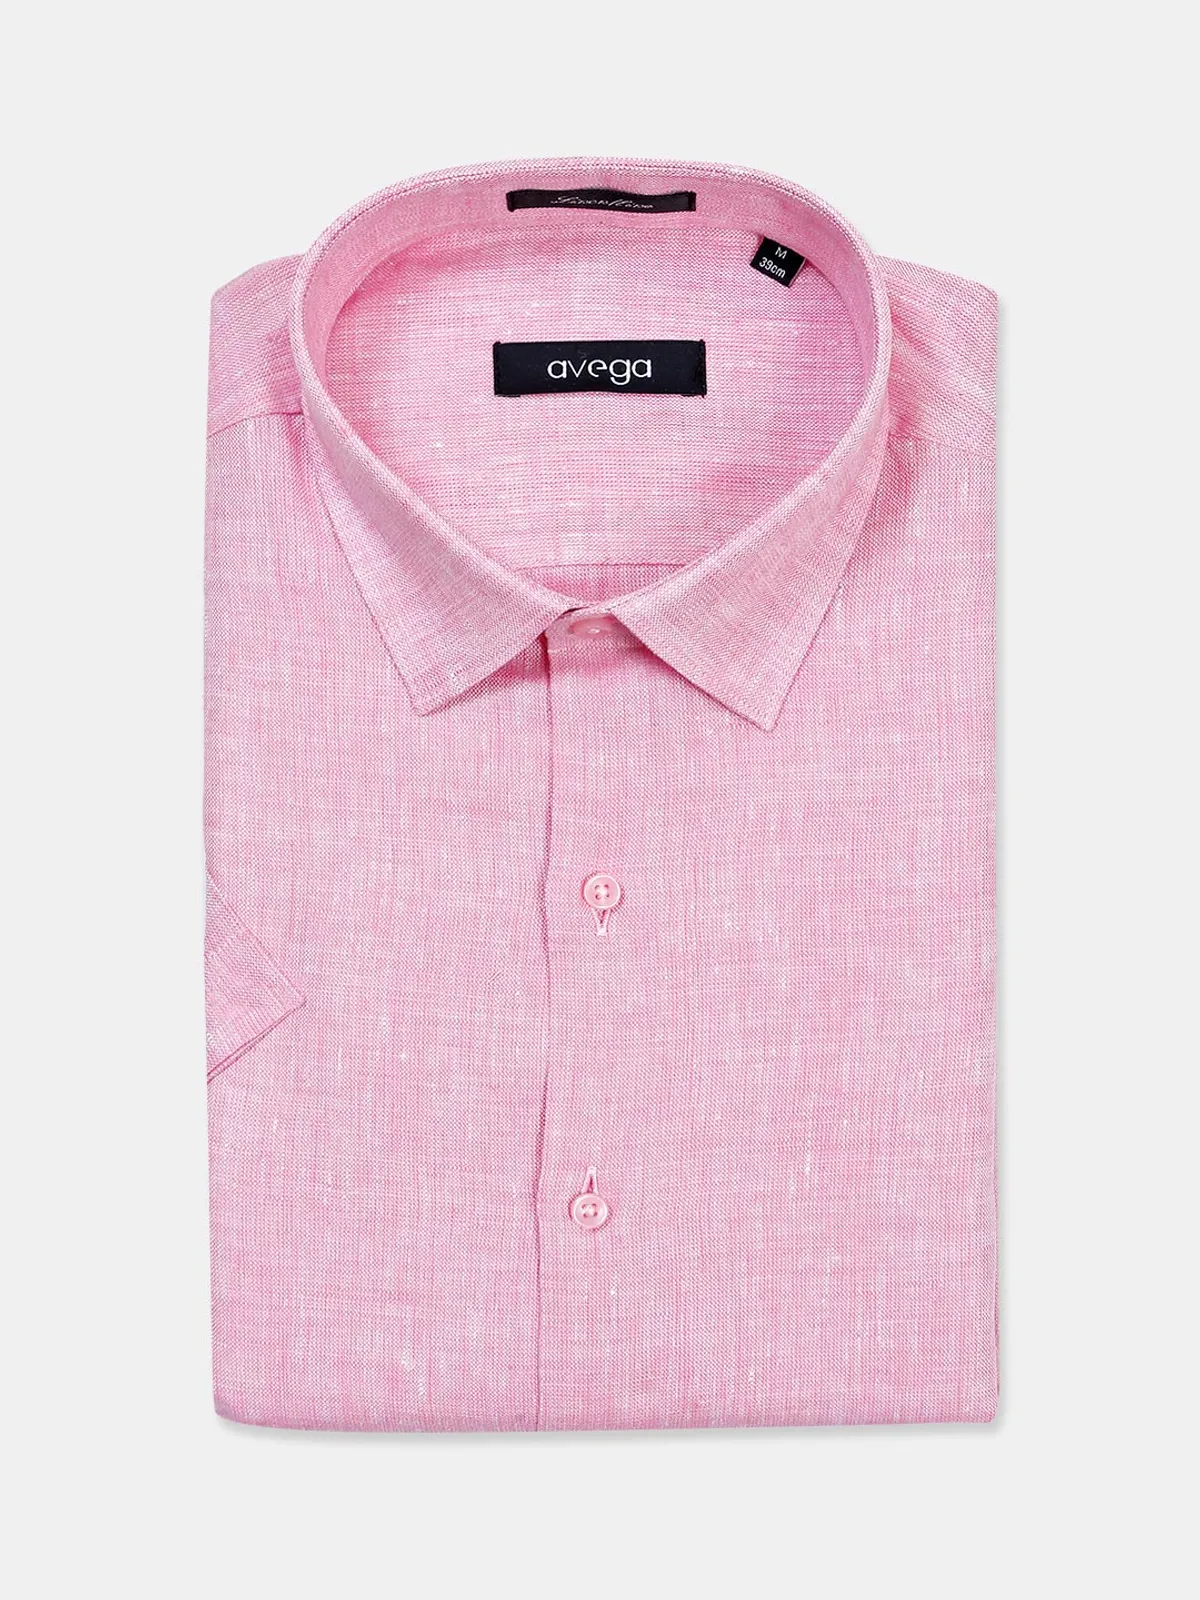 Avega pink solid linen cut away collar shirt